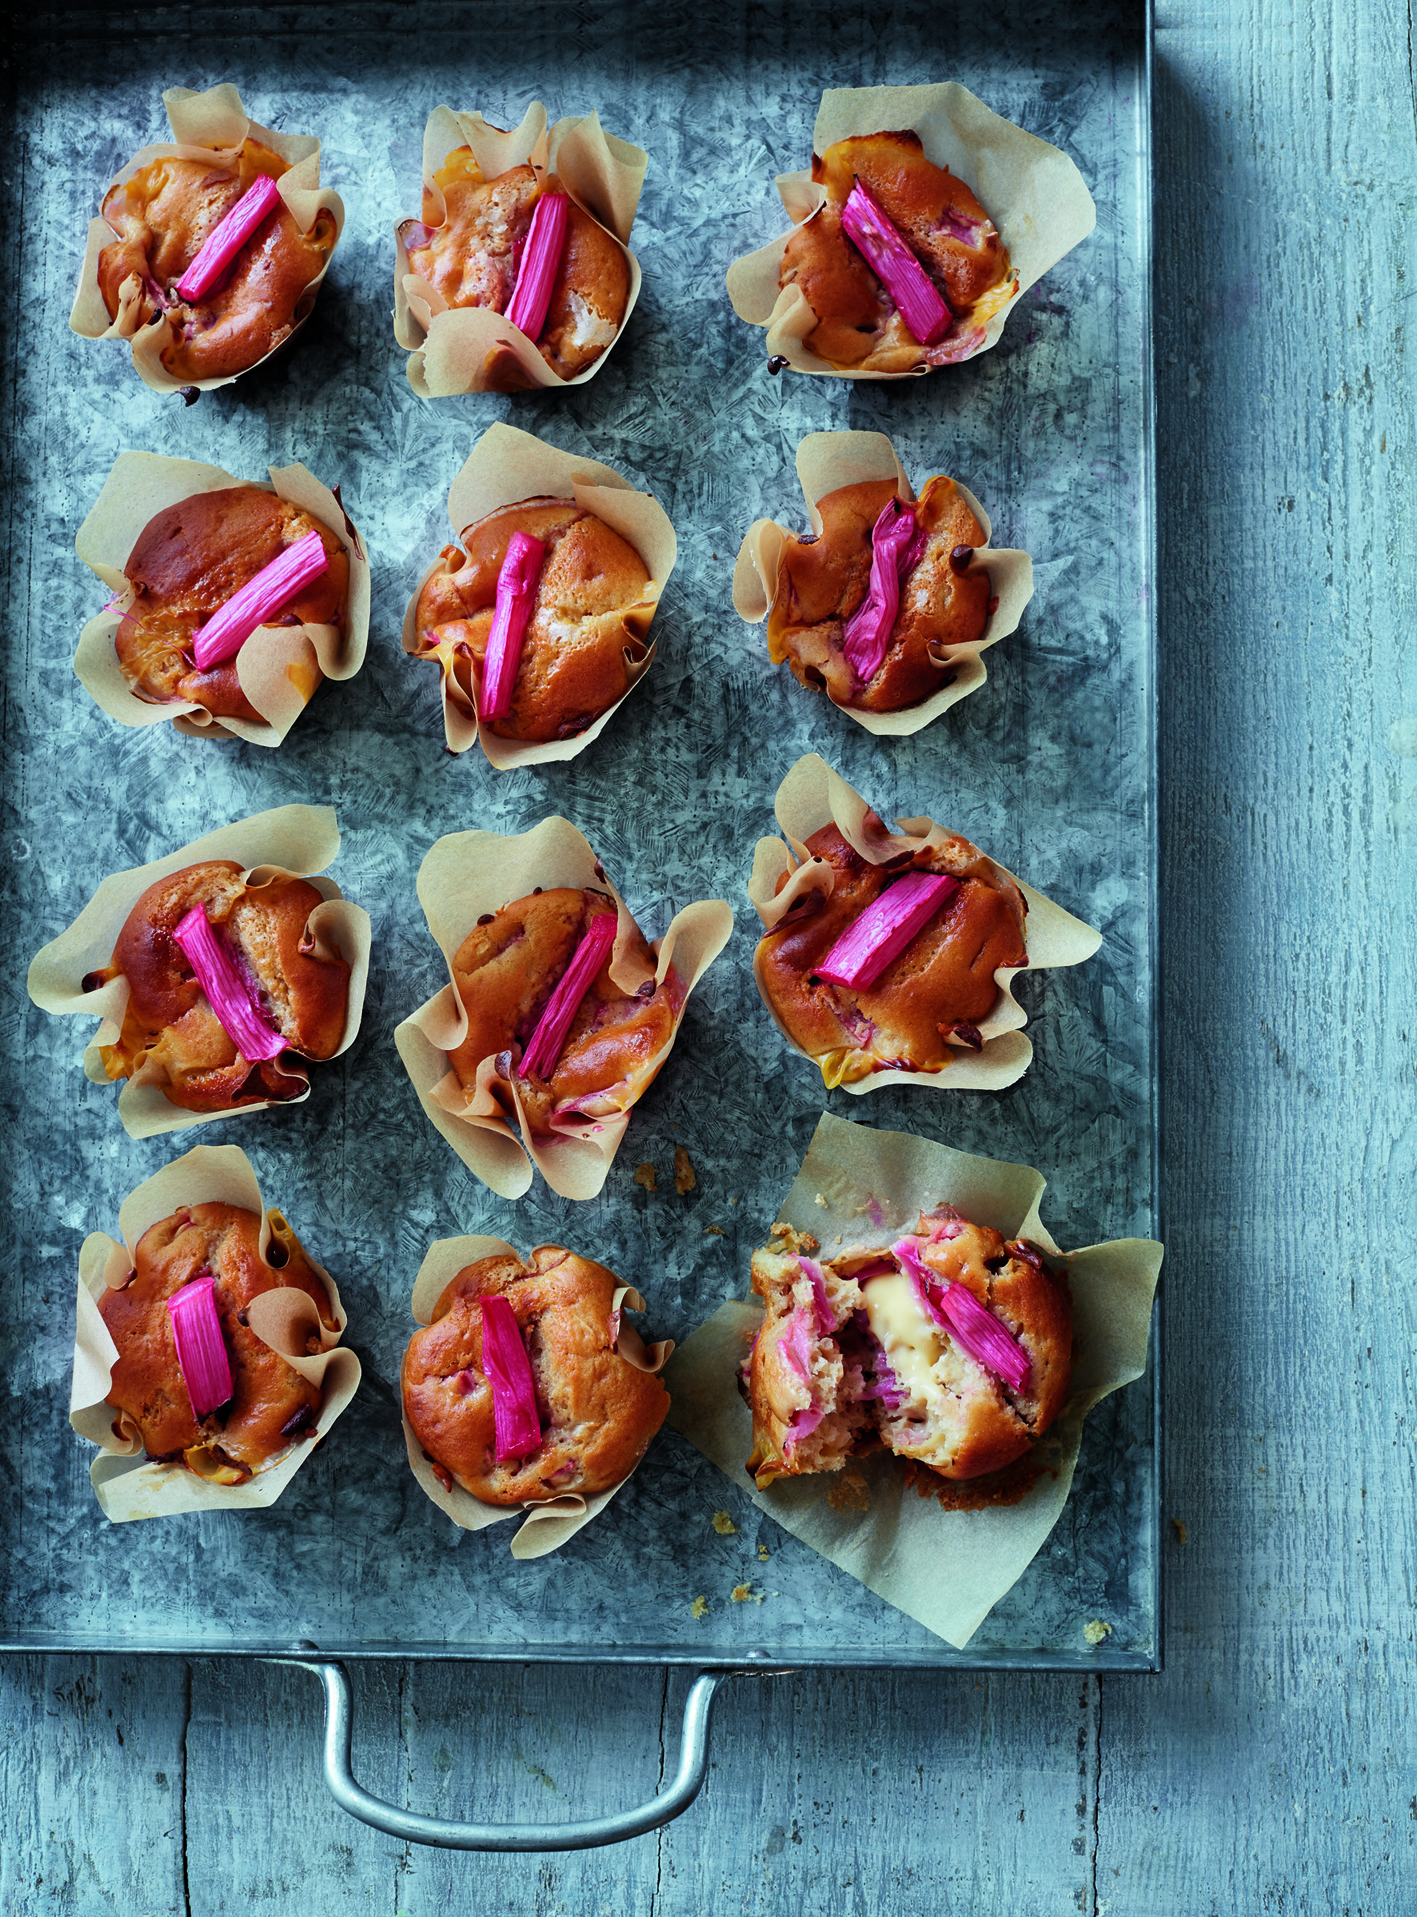 Rhubarb and custard muffins from Tanya Bakes by Tanya Burr